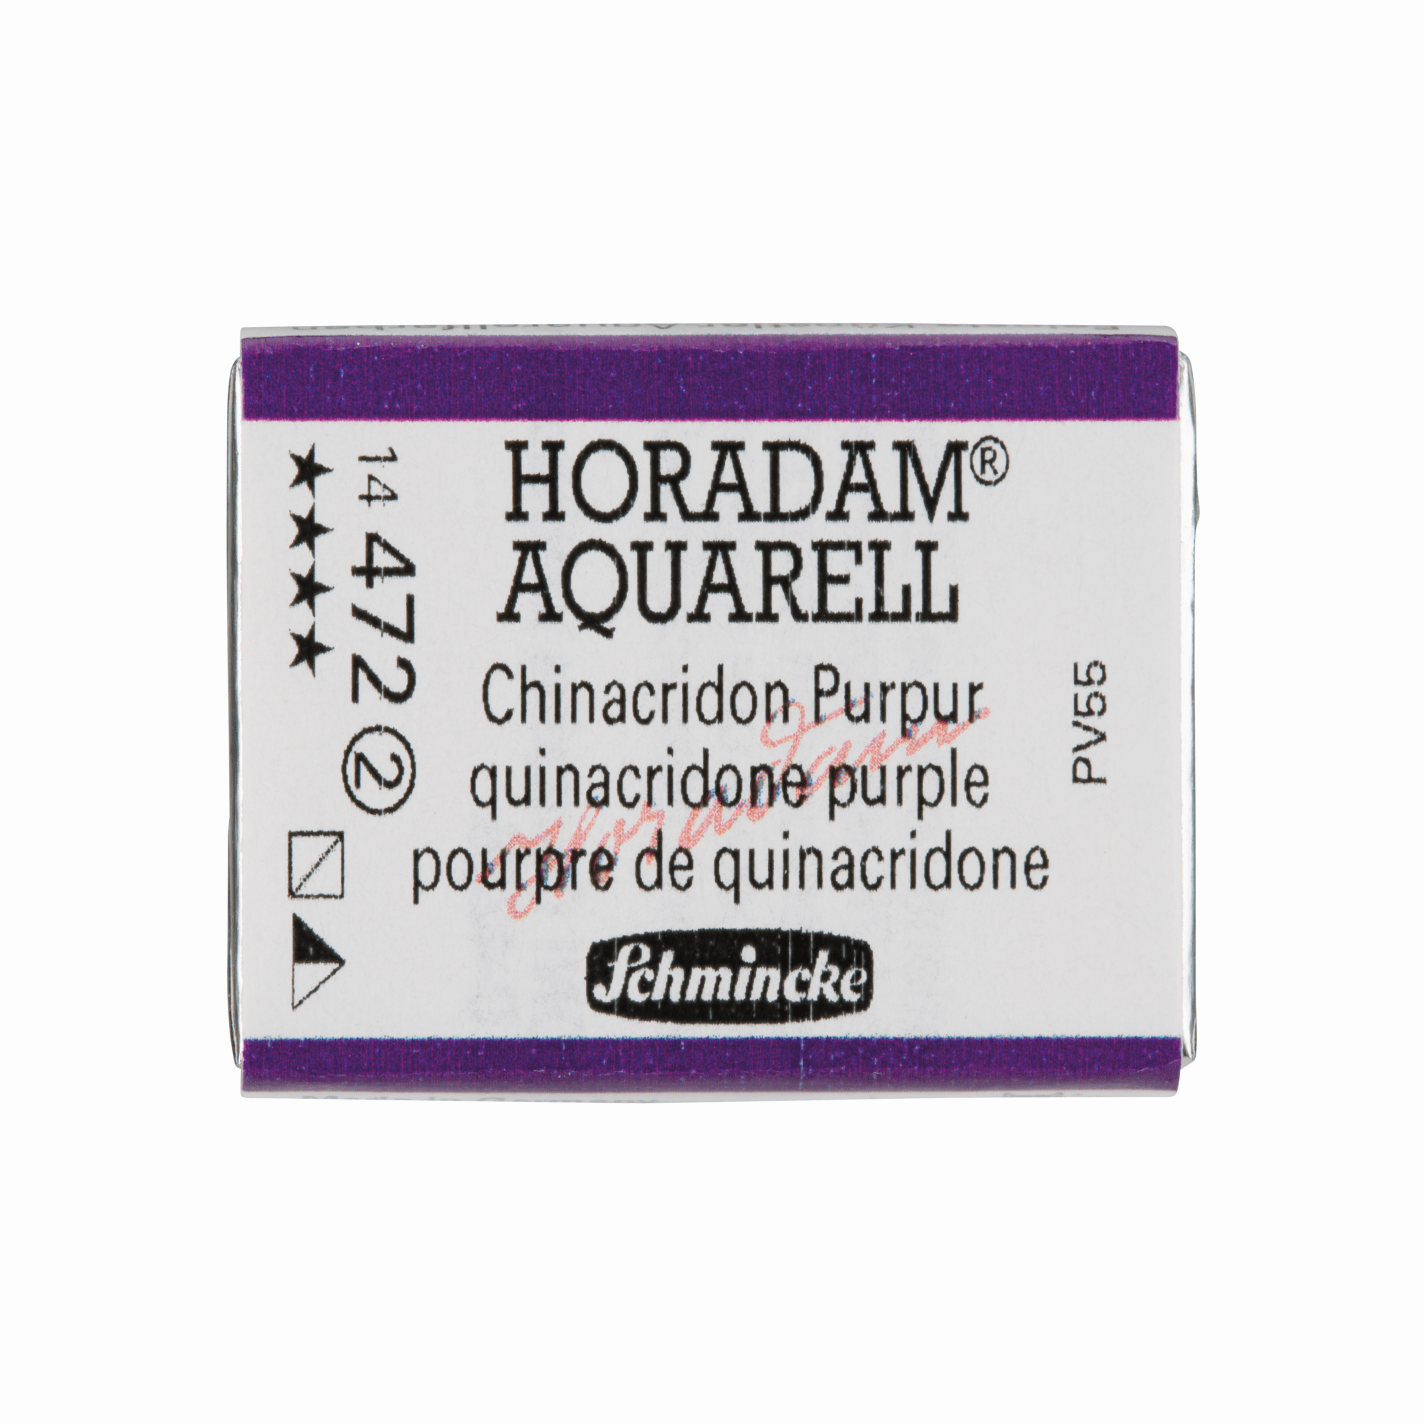 Schmincke Horadam Aquarell pans 1/1 pan Quinacridone Purple